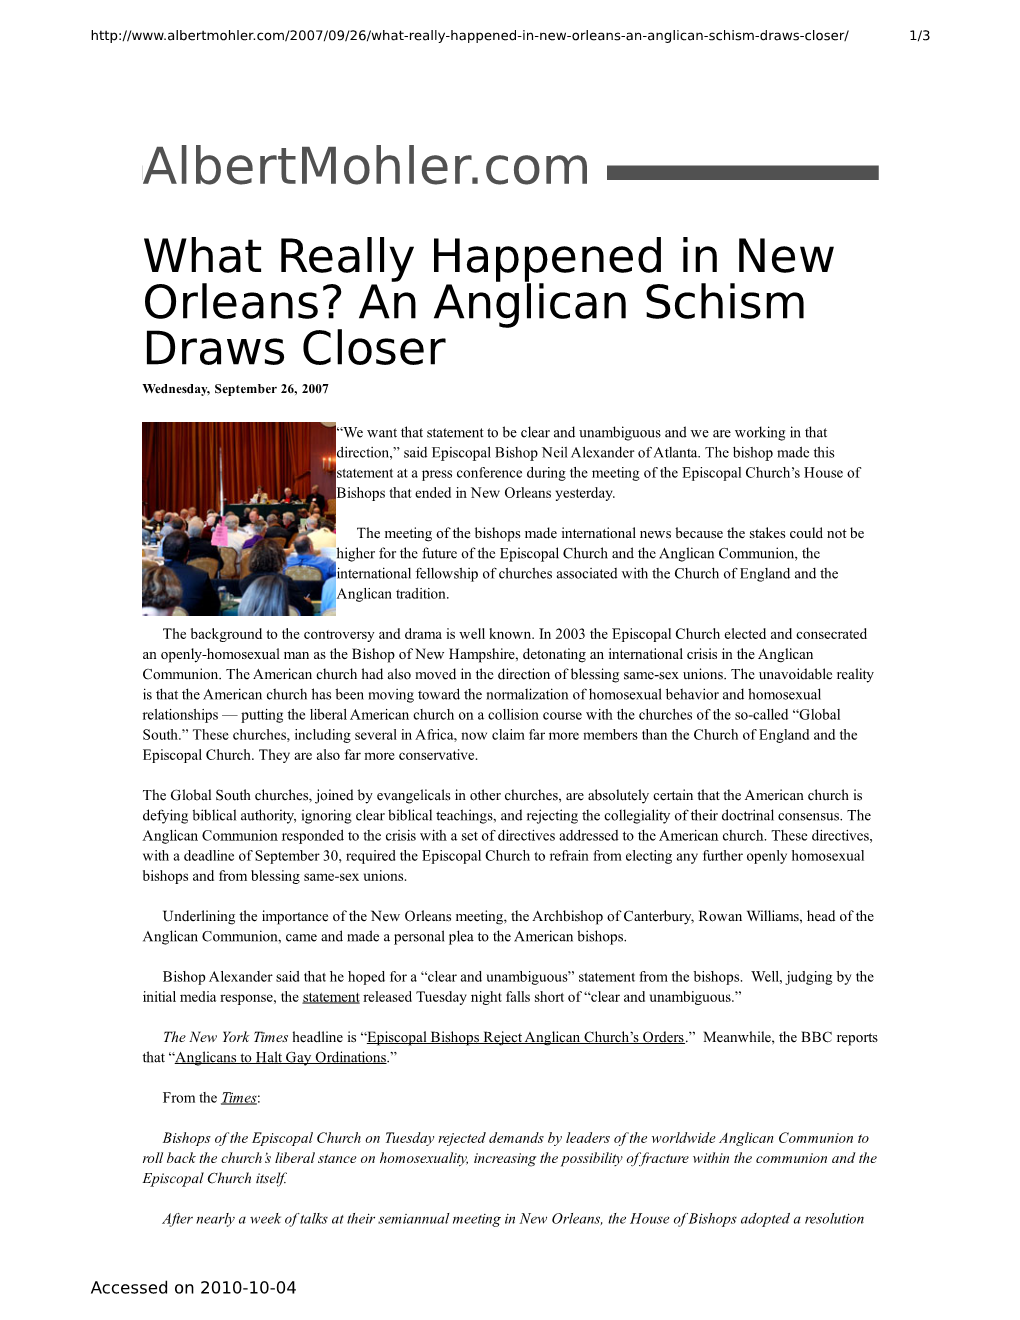 An Anglican Schism Draws Closer Wednesday, September 26, 2007